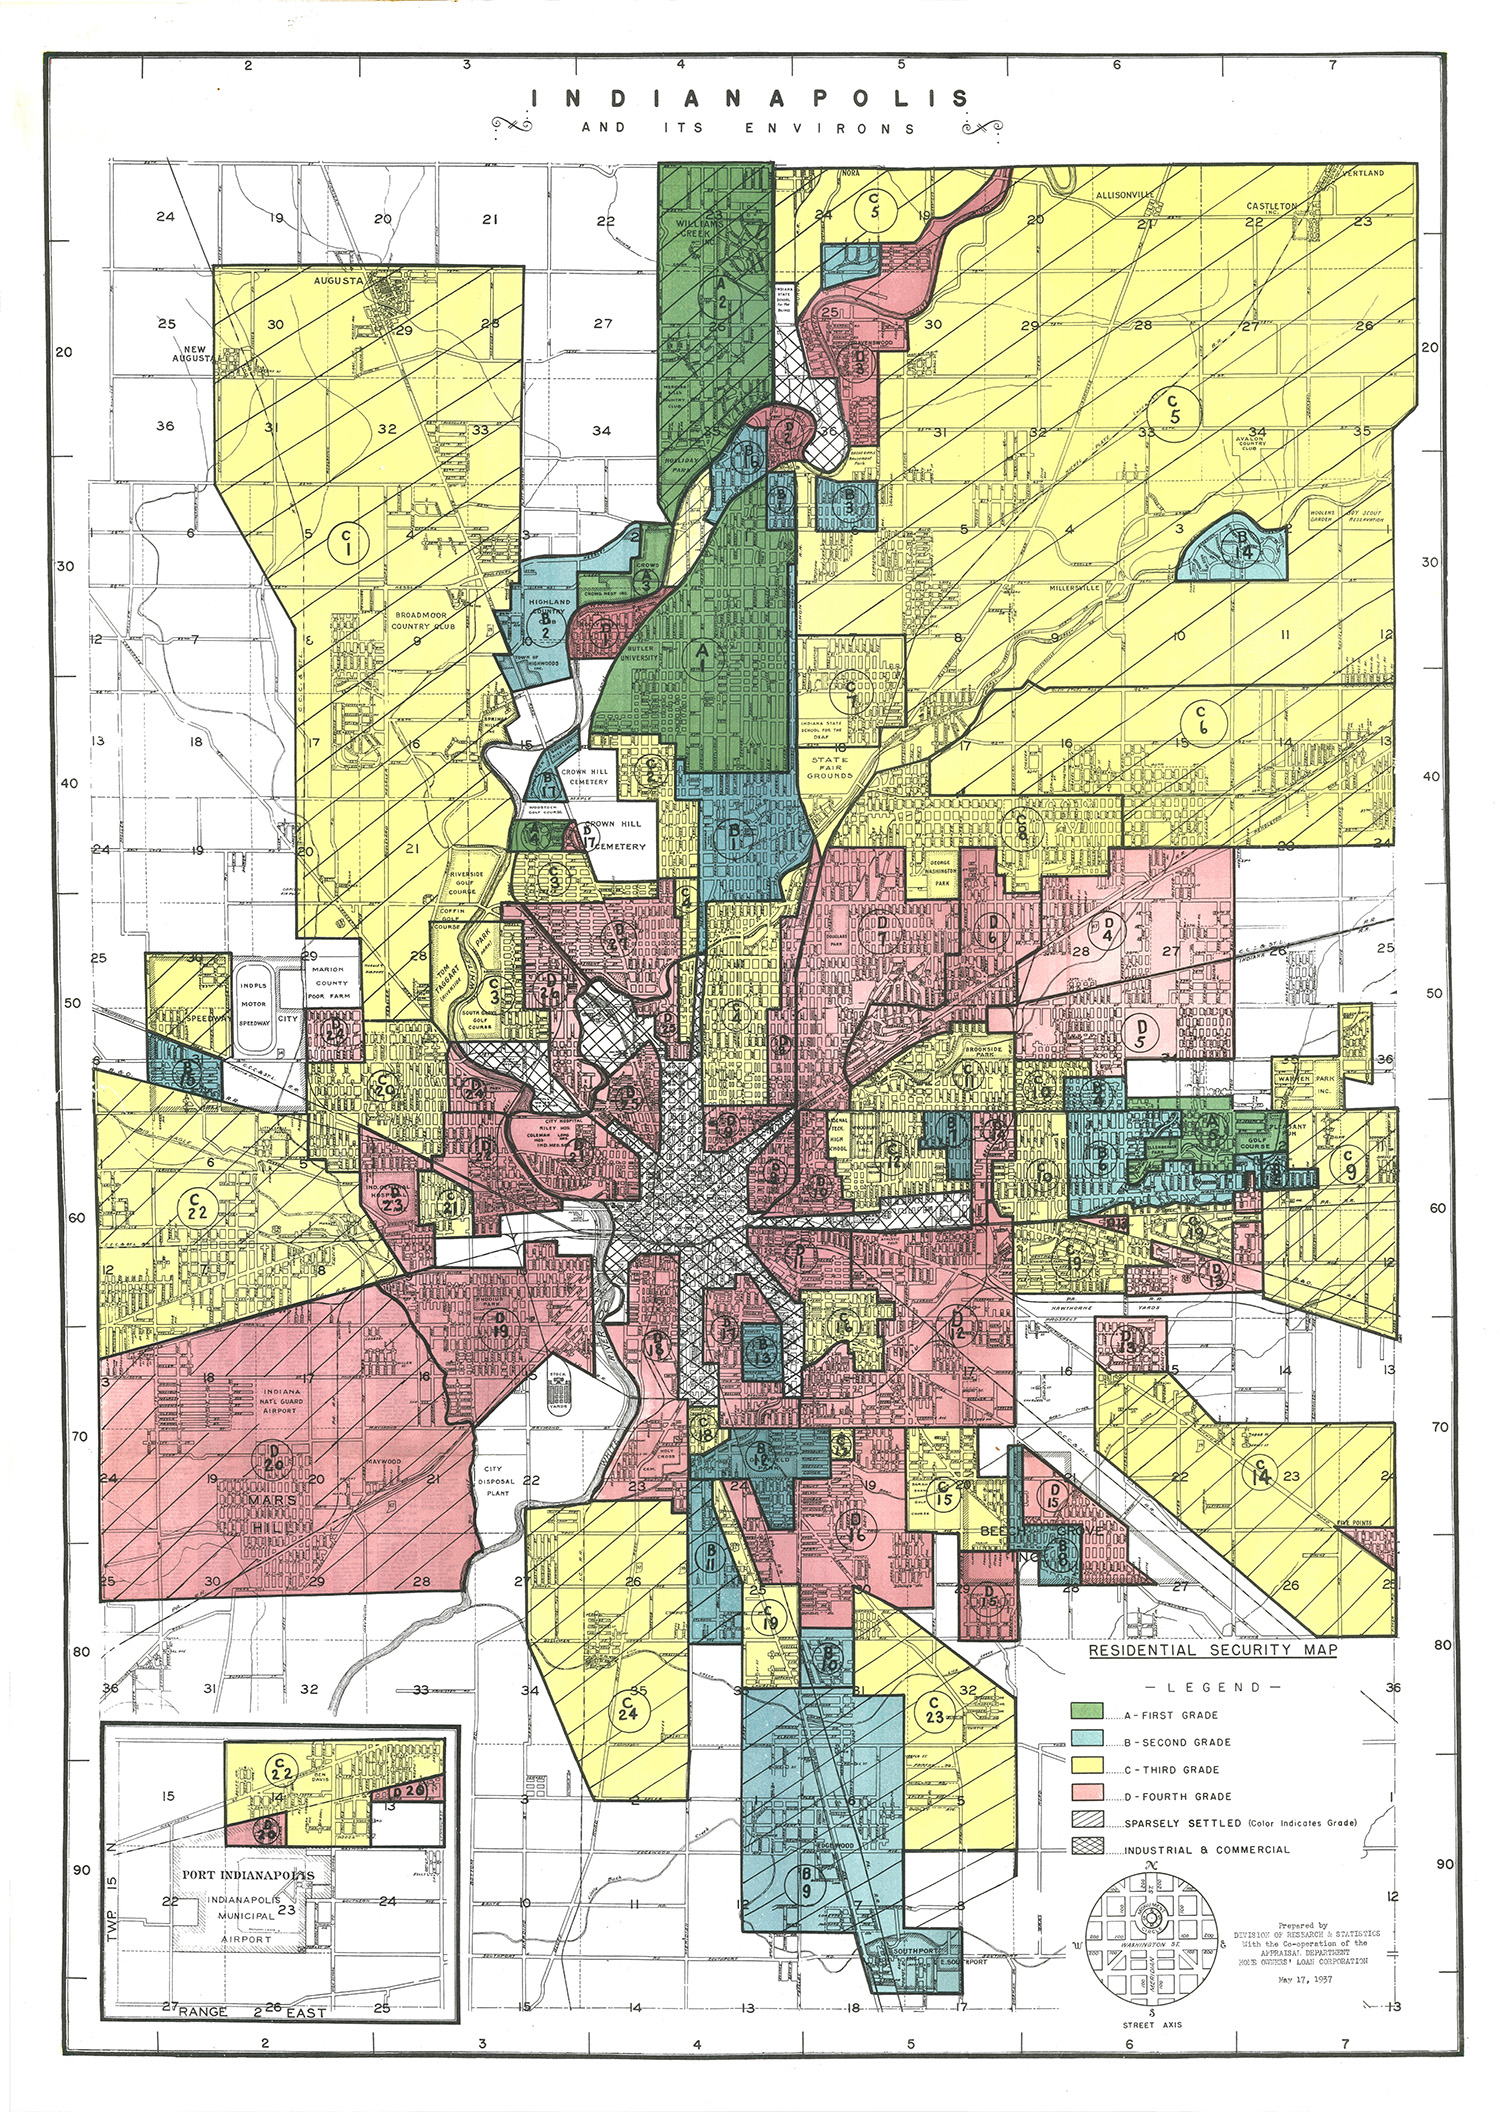 Redlining Map of Indianapolis